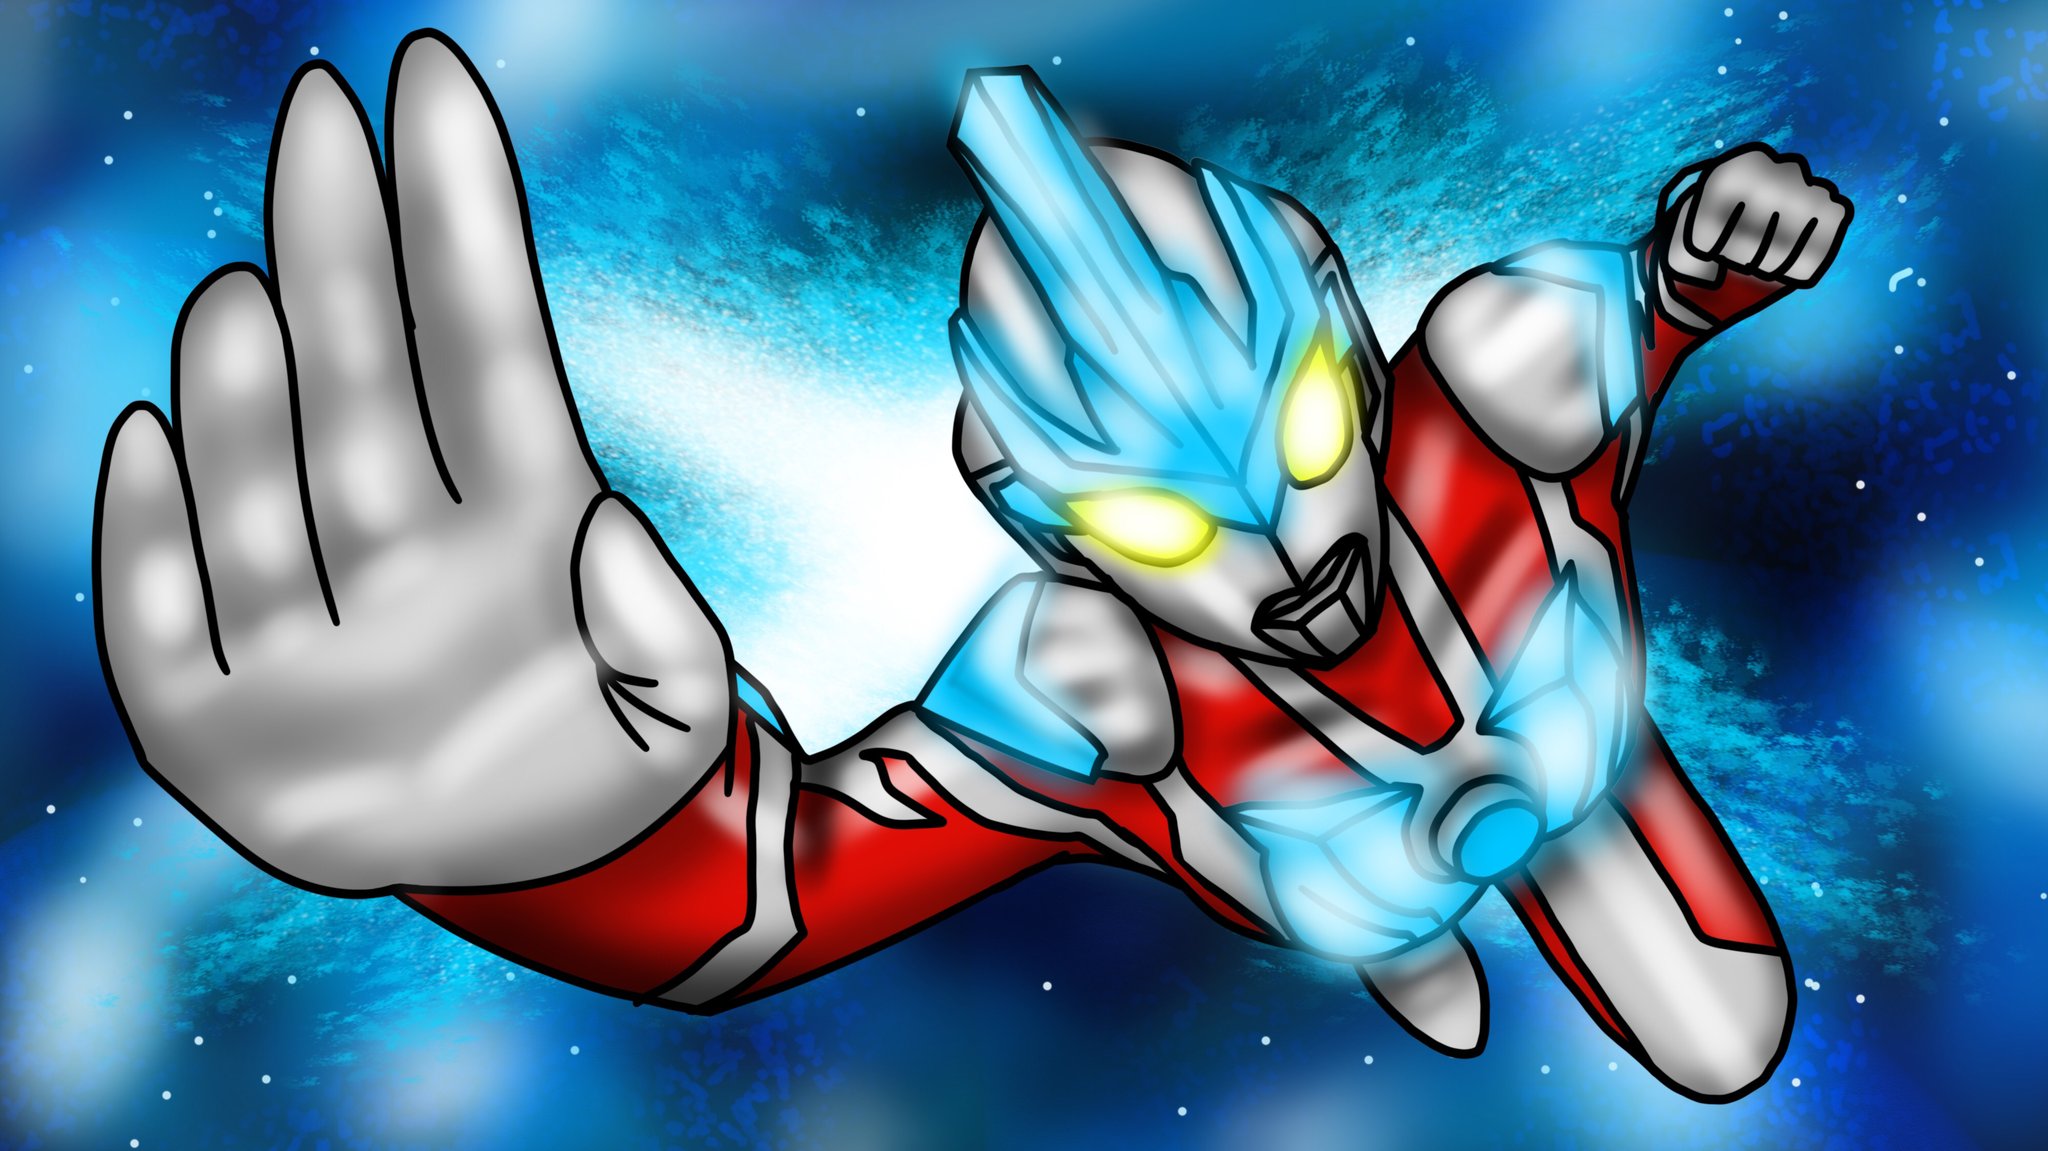 توییتر ファントムゼットンx18 Phantomzettonx18 در توییتر Legend Of The Galaxy Ginga Ultraman Ultramanginga Toku Digitalart Fanart ウルトラマンギンガ T Co Voqro5ab9h